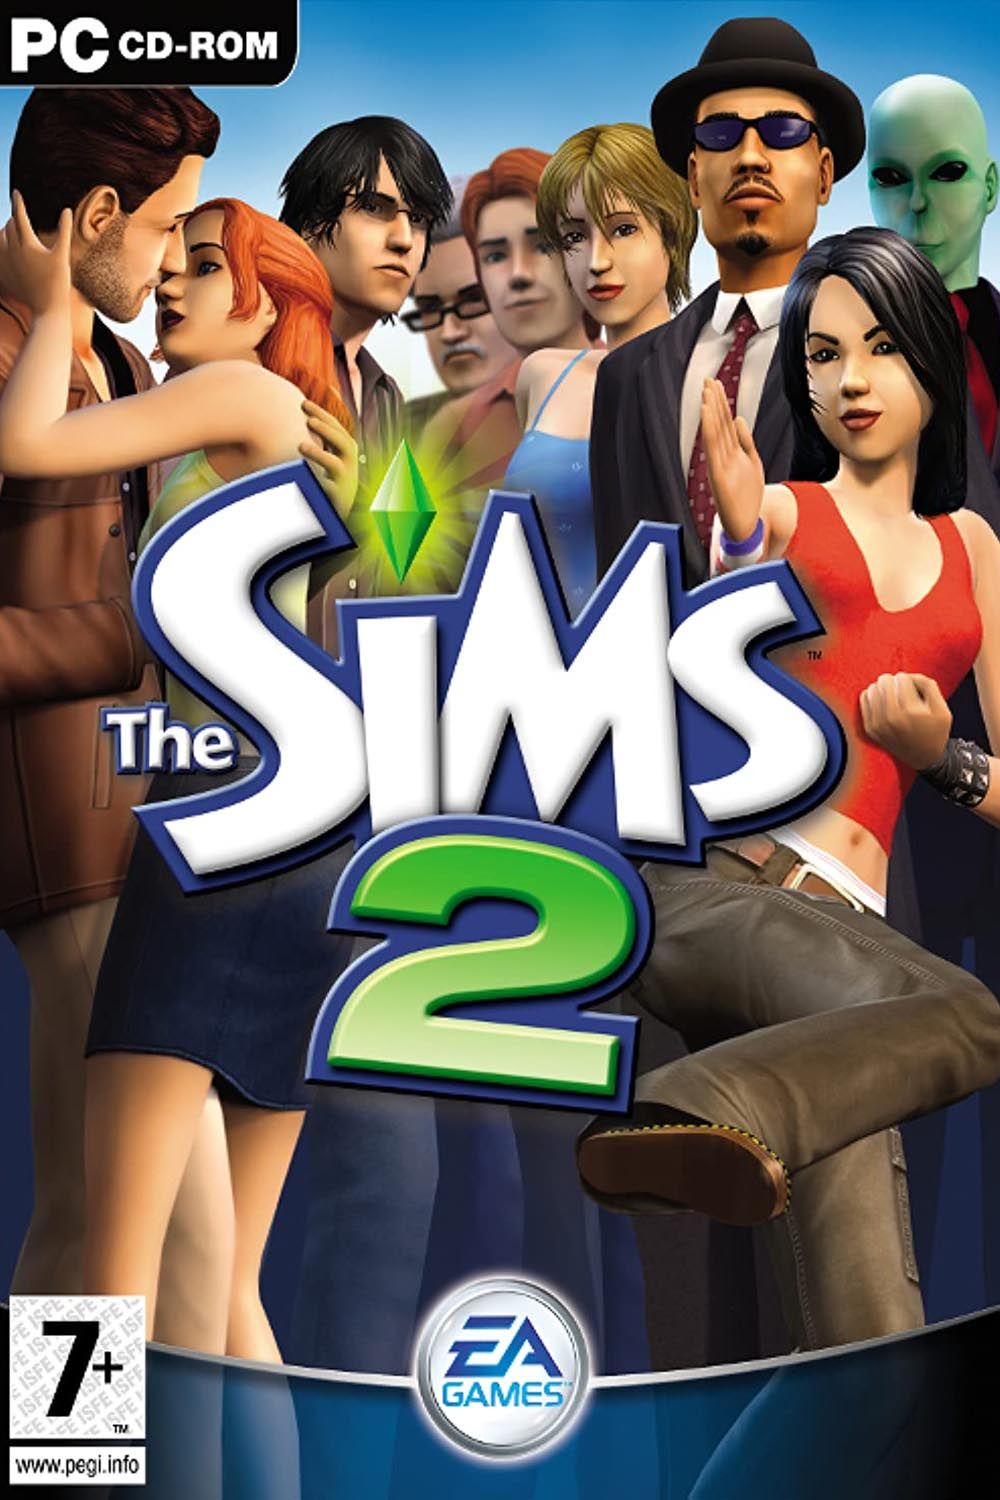 The Sims 2 imdb